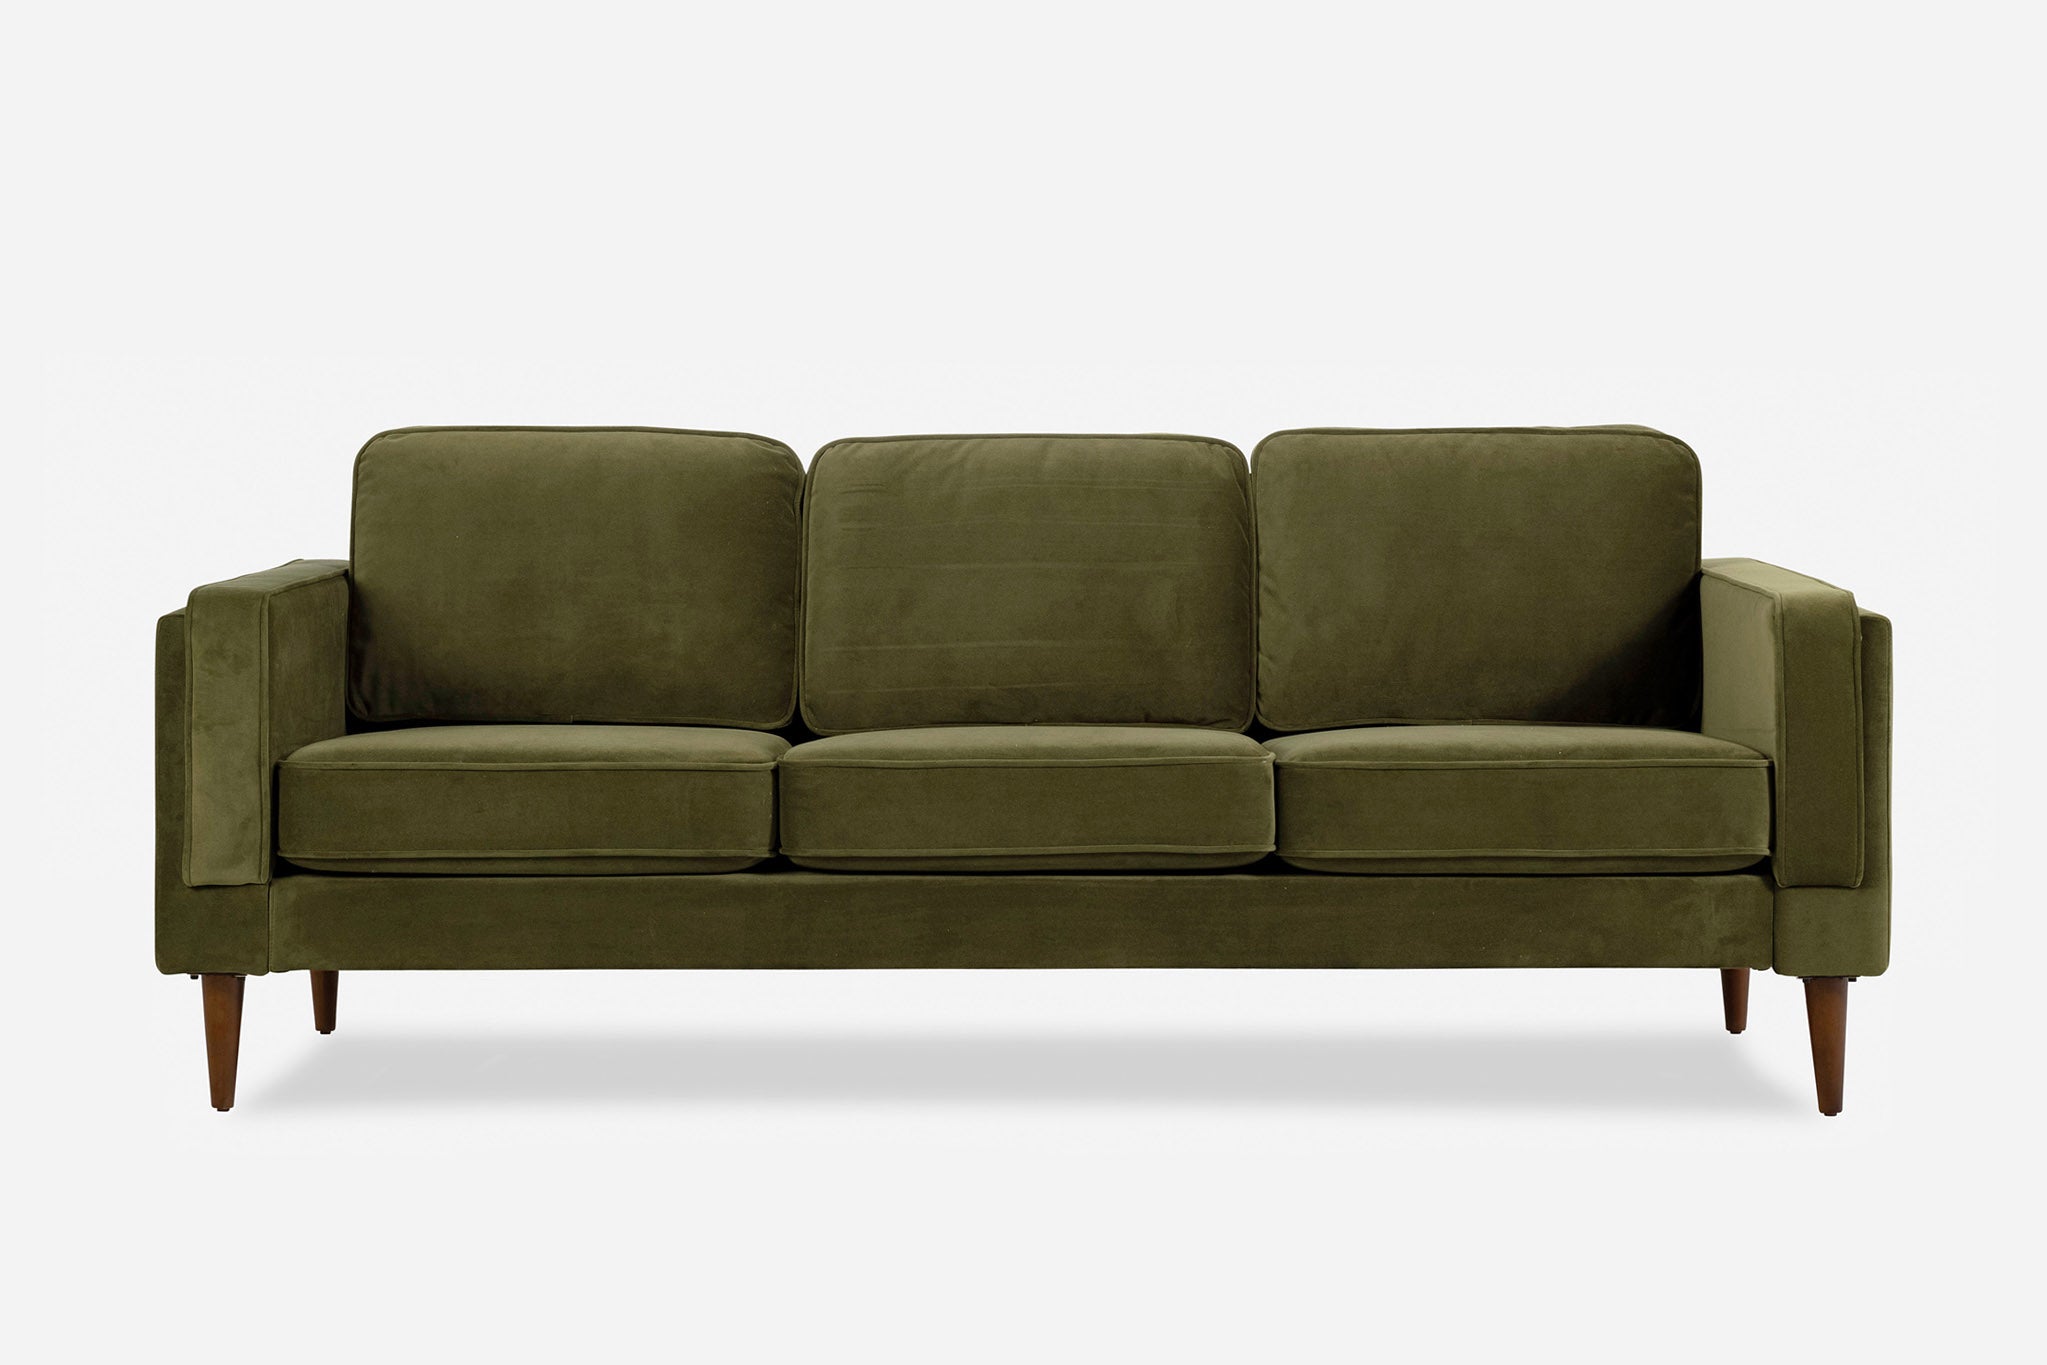 albany sofa shown in olive velvet with walnut legs